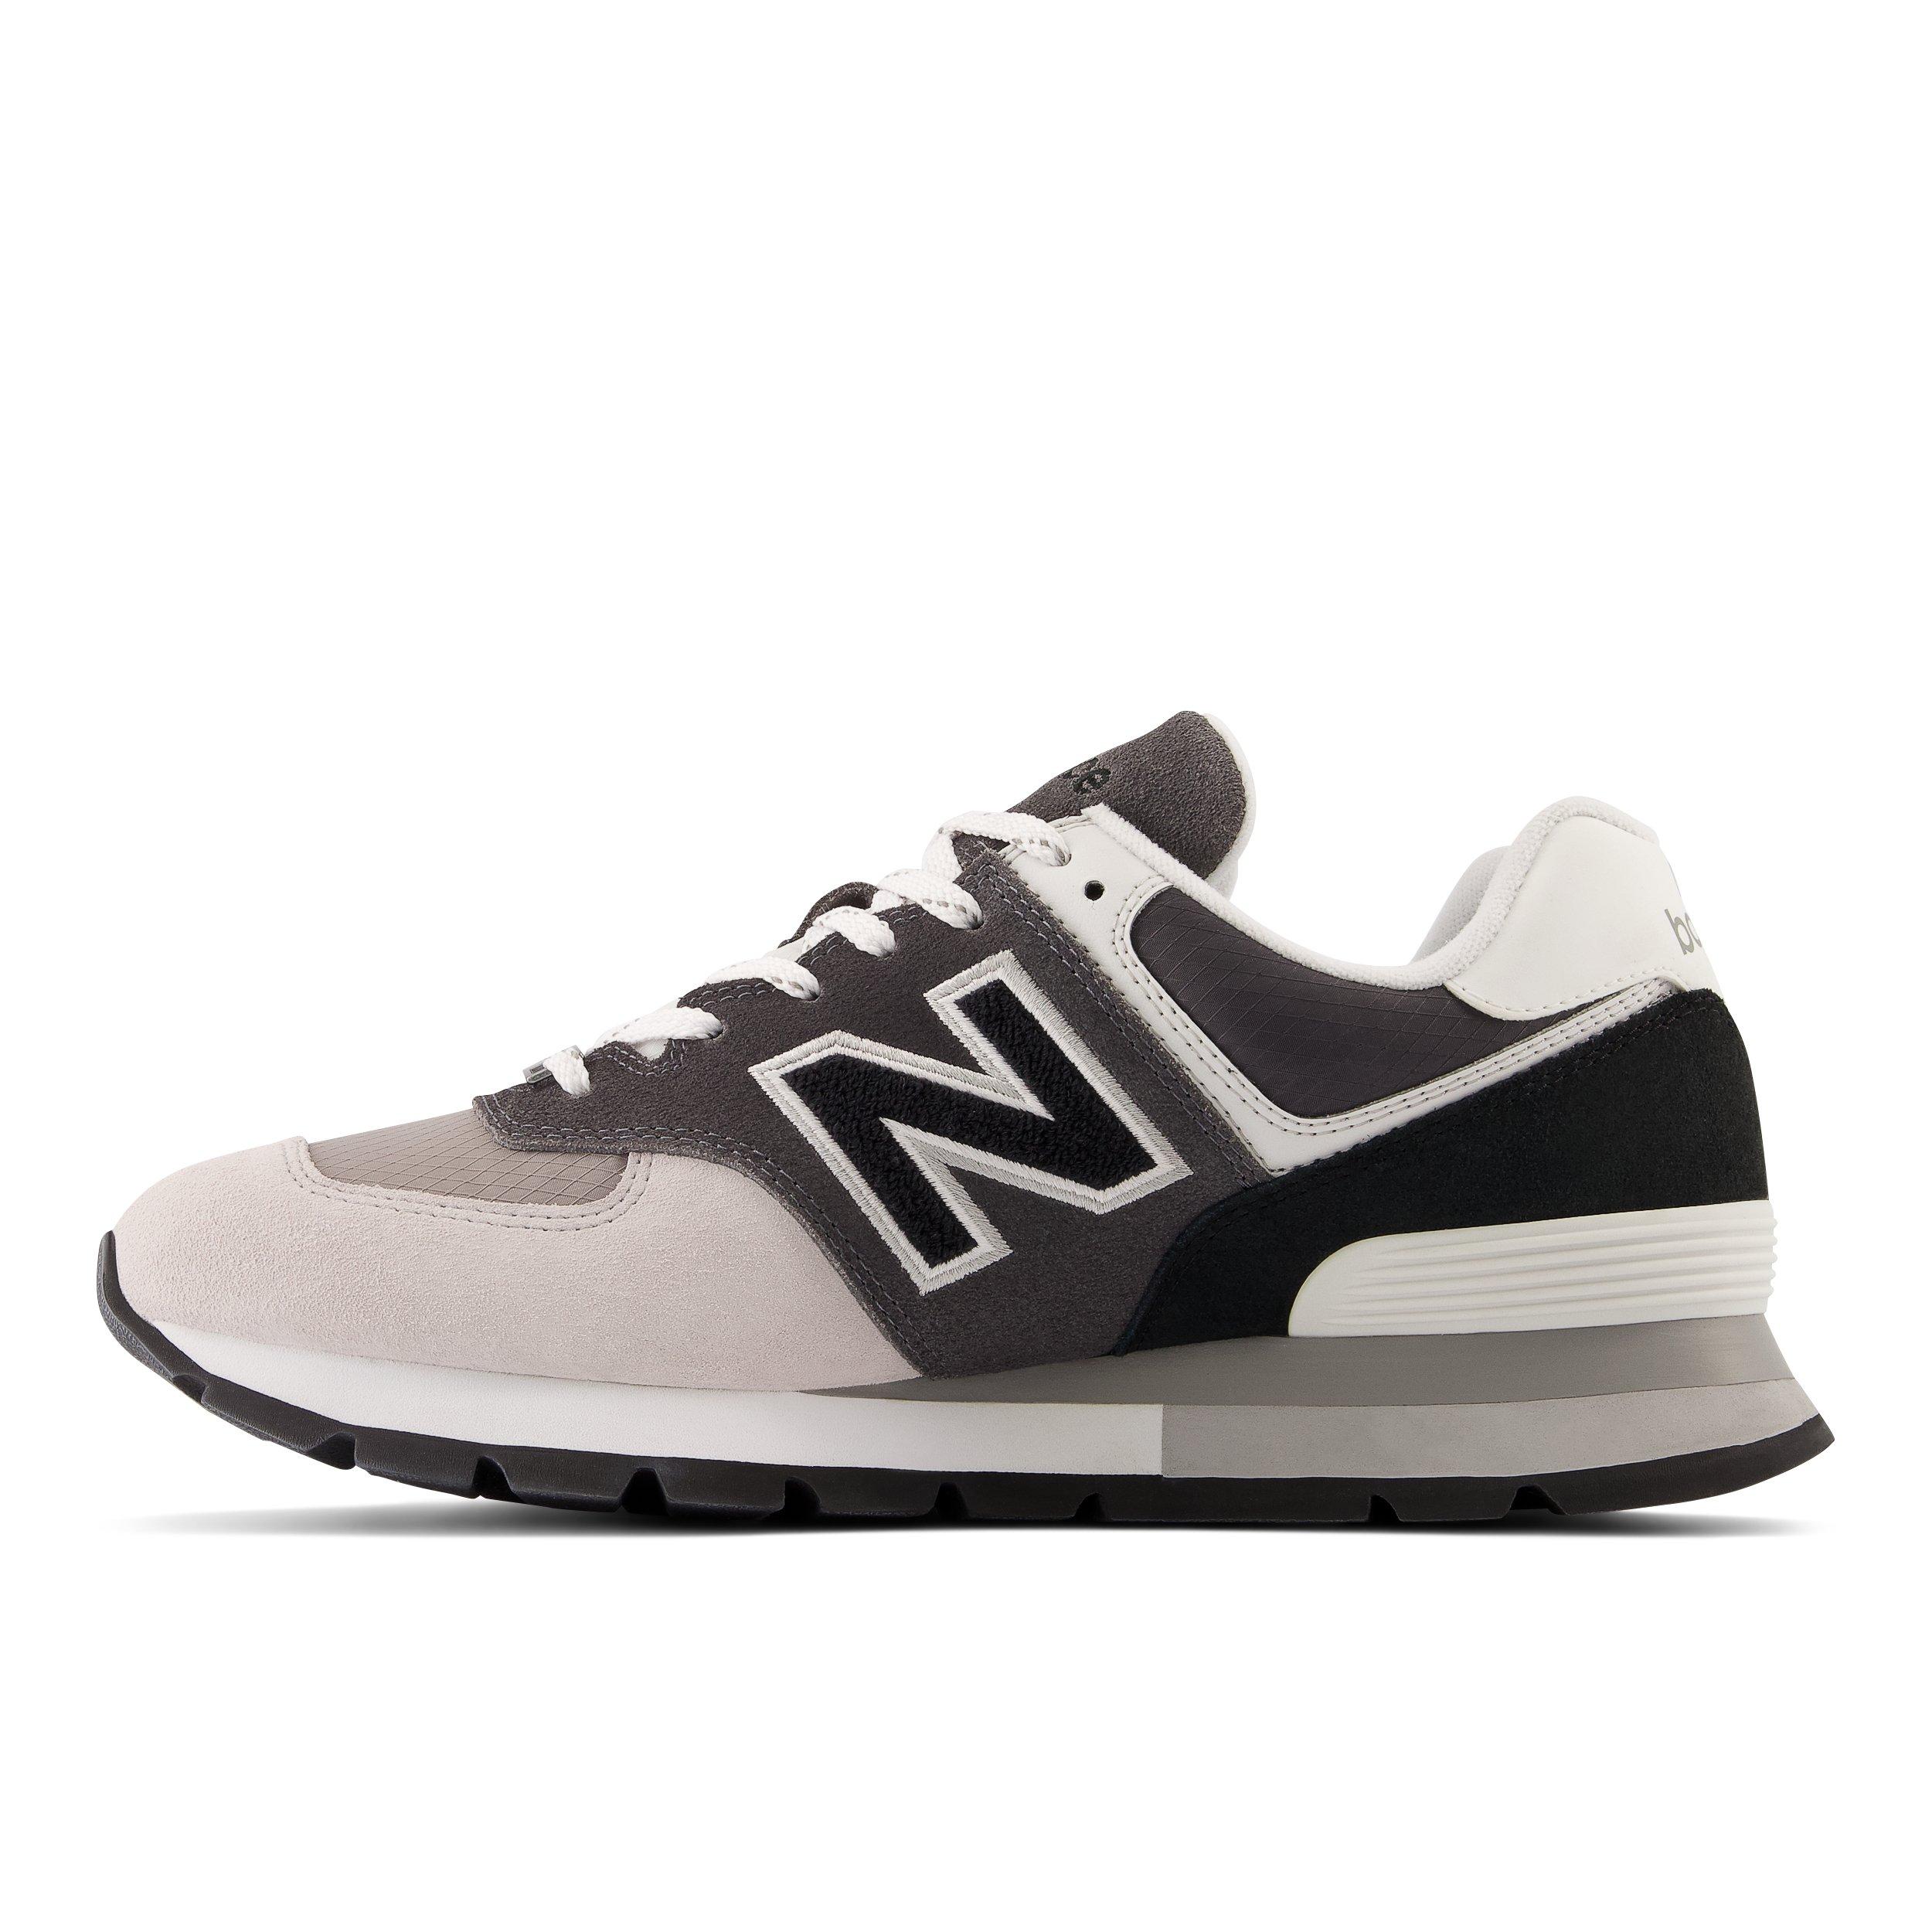 New Balance 574 "Black/Grey/White" Men's Shoe